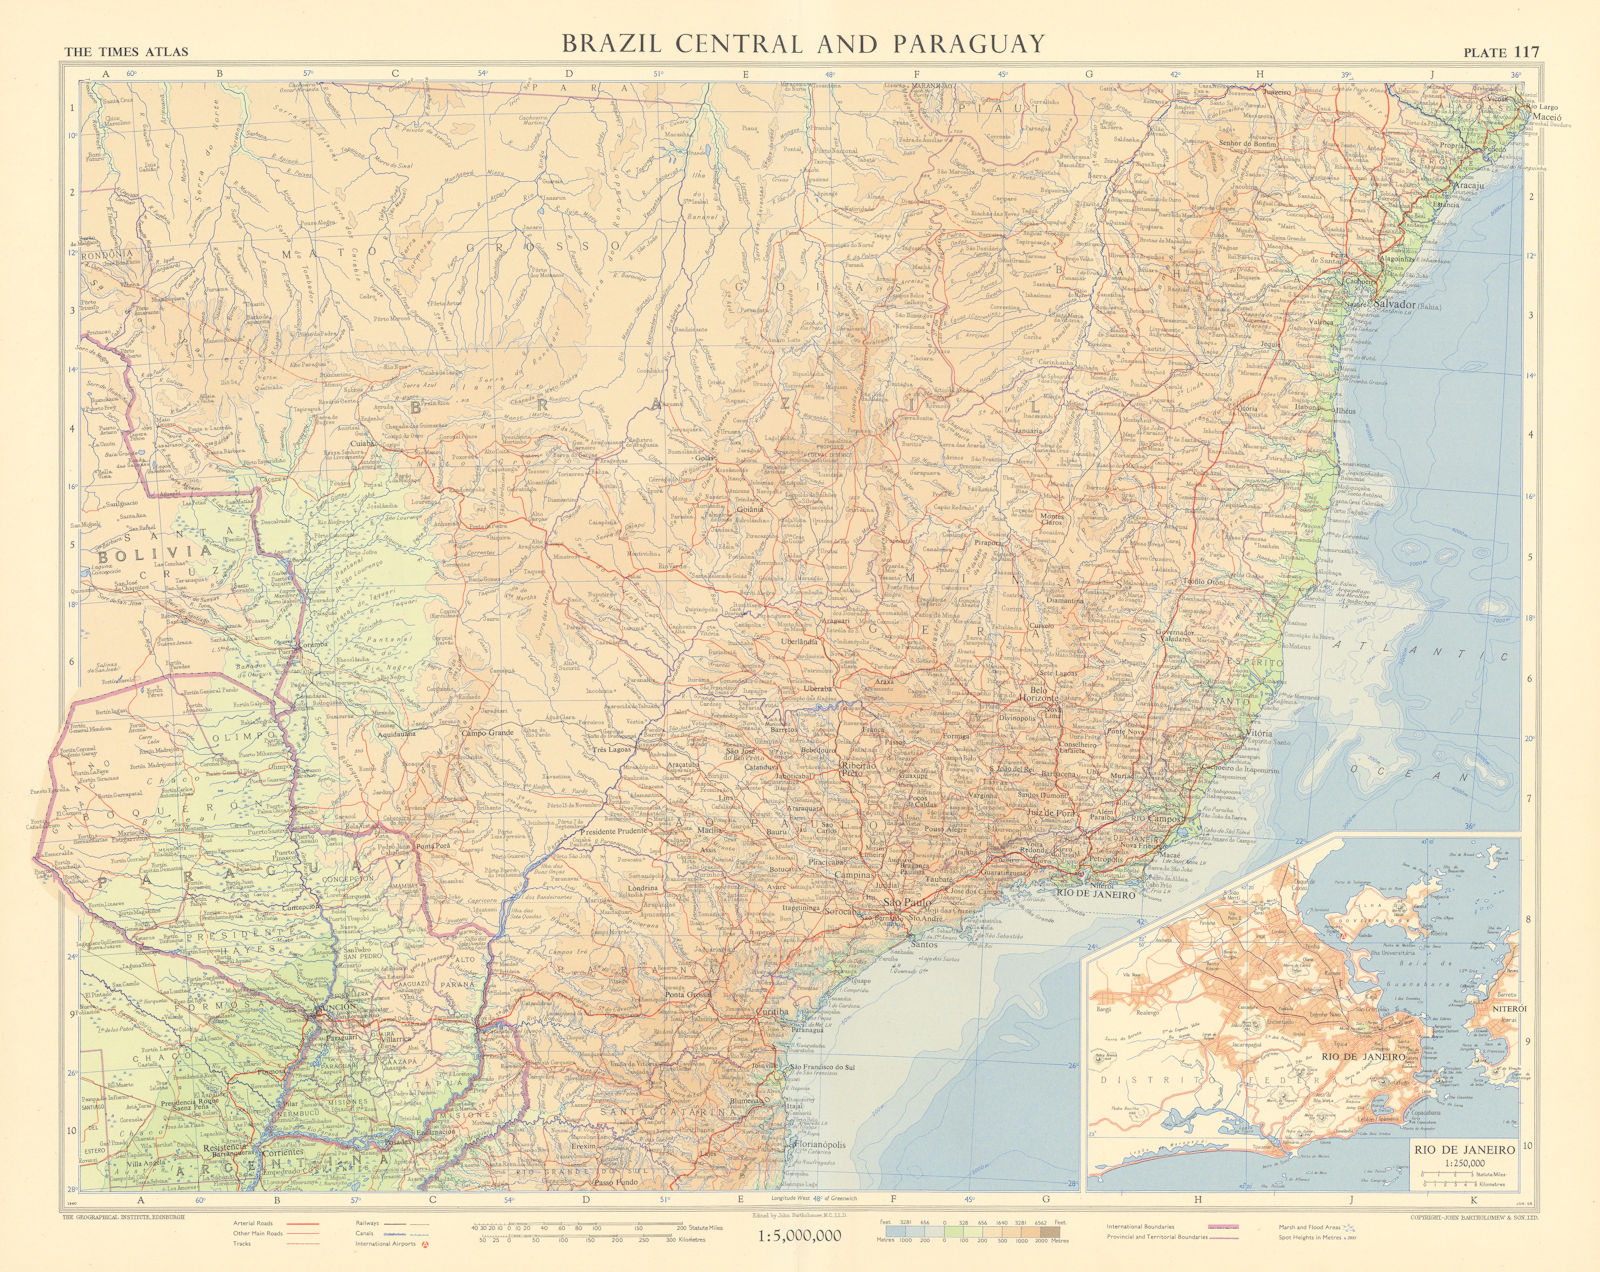 Brazil central & Paraguay. Rio de Janeiro environs. TIMES 1957 old vintage map